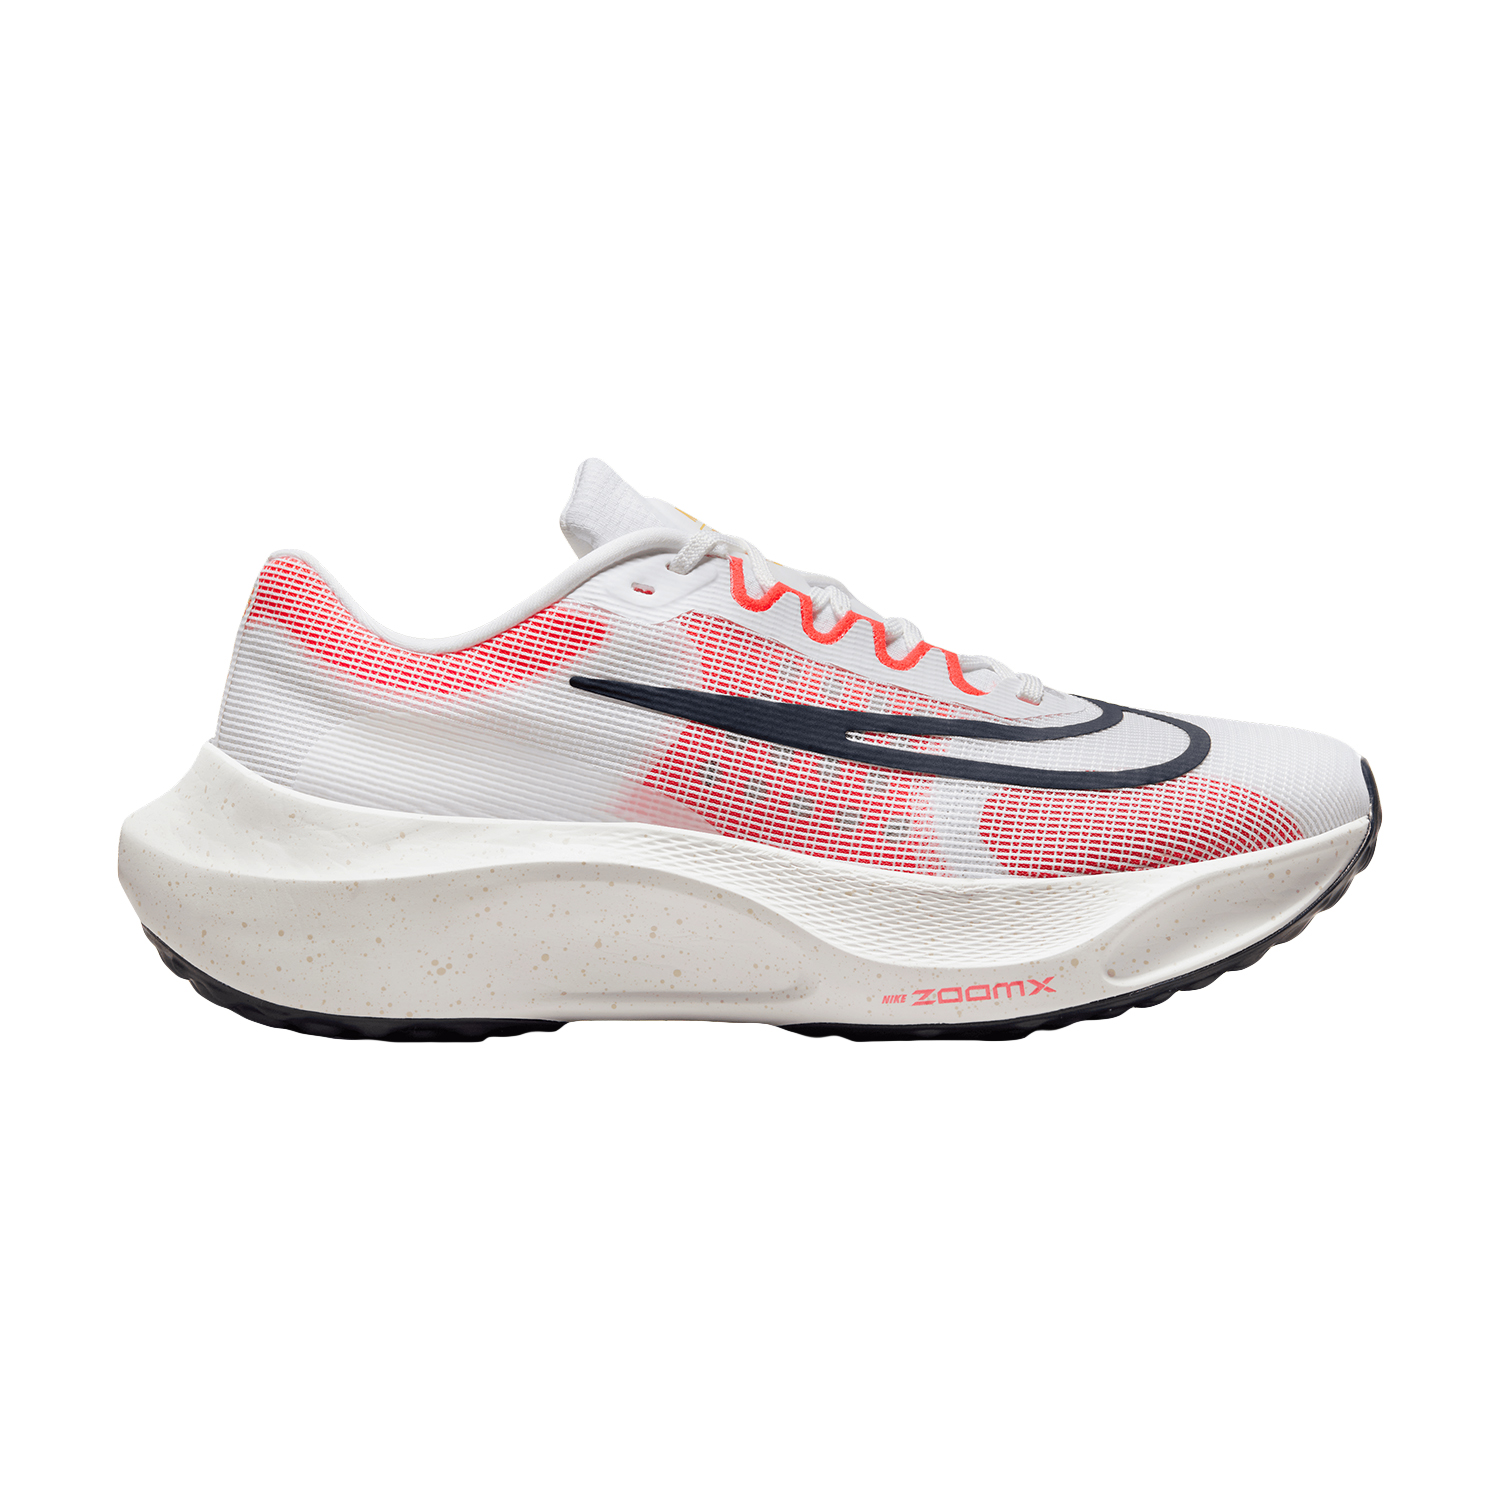 Nike Zoom Fly 5 Men's Running Shoes - Oxygen Purple/Gridiron